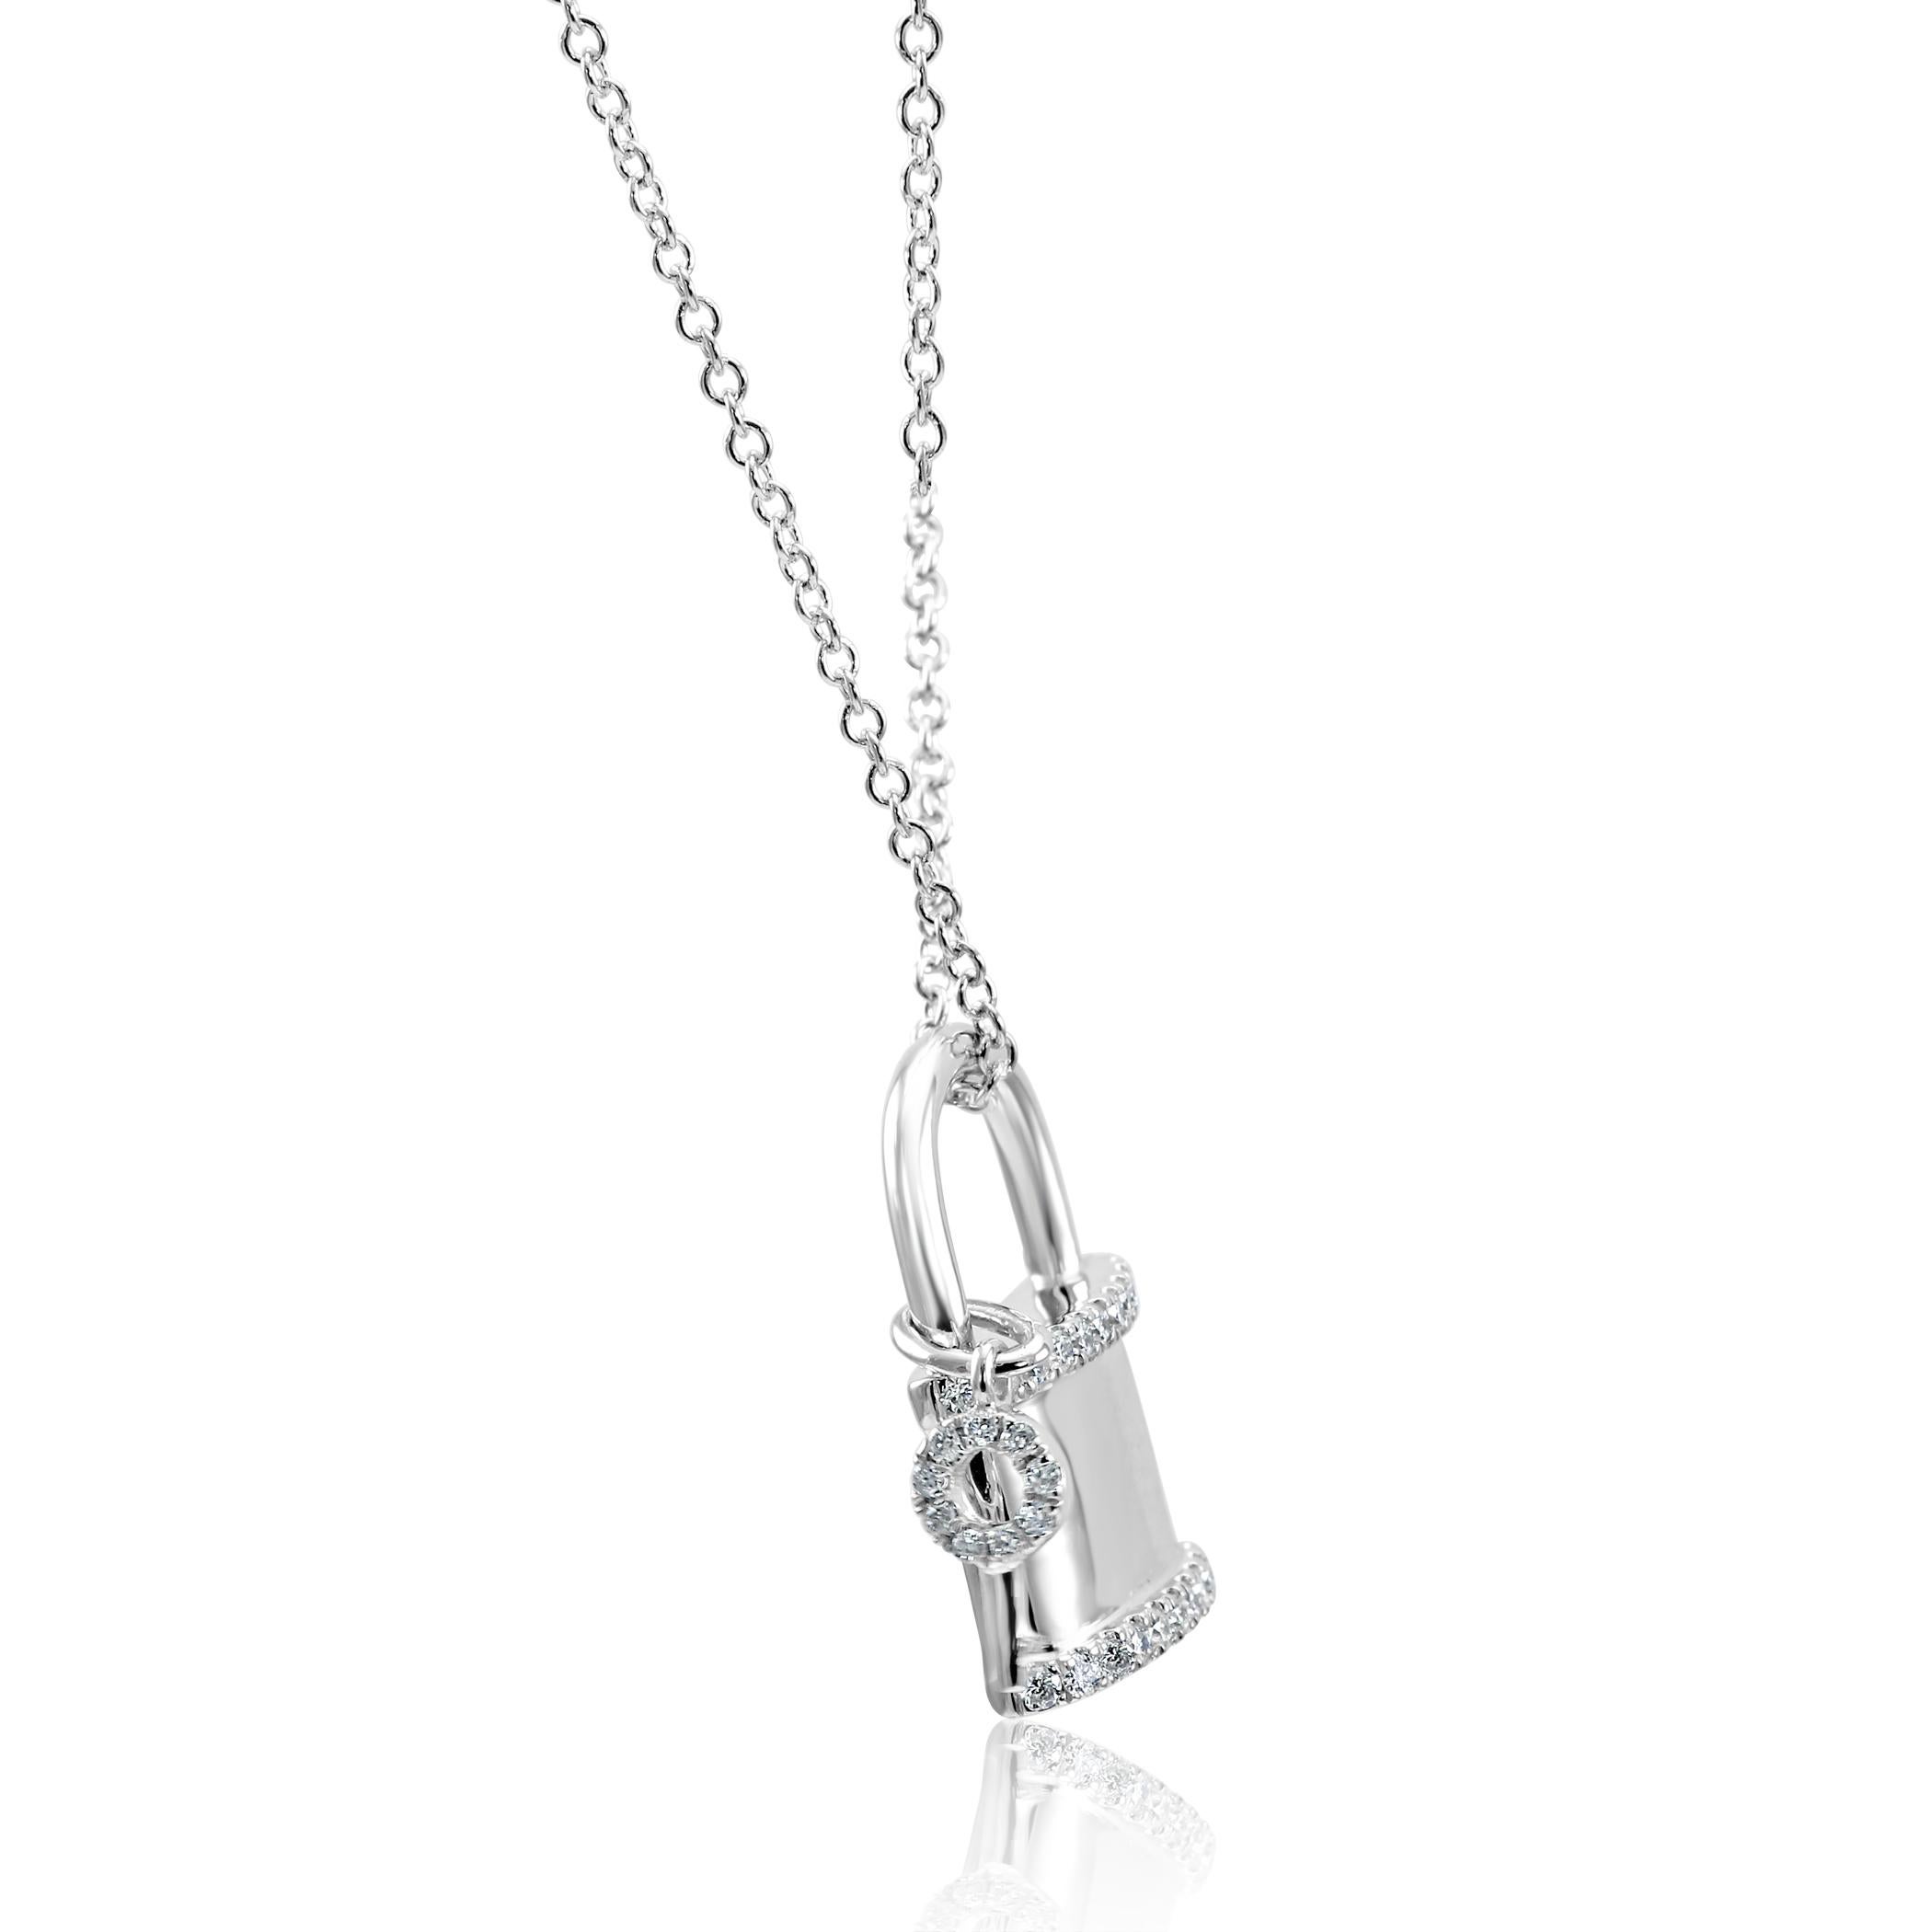 Round Cut White Diamond Round Fashion Lock and Key Pendant 14K White Gold Chain Necklace 